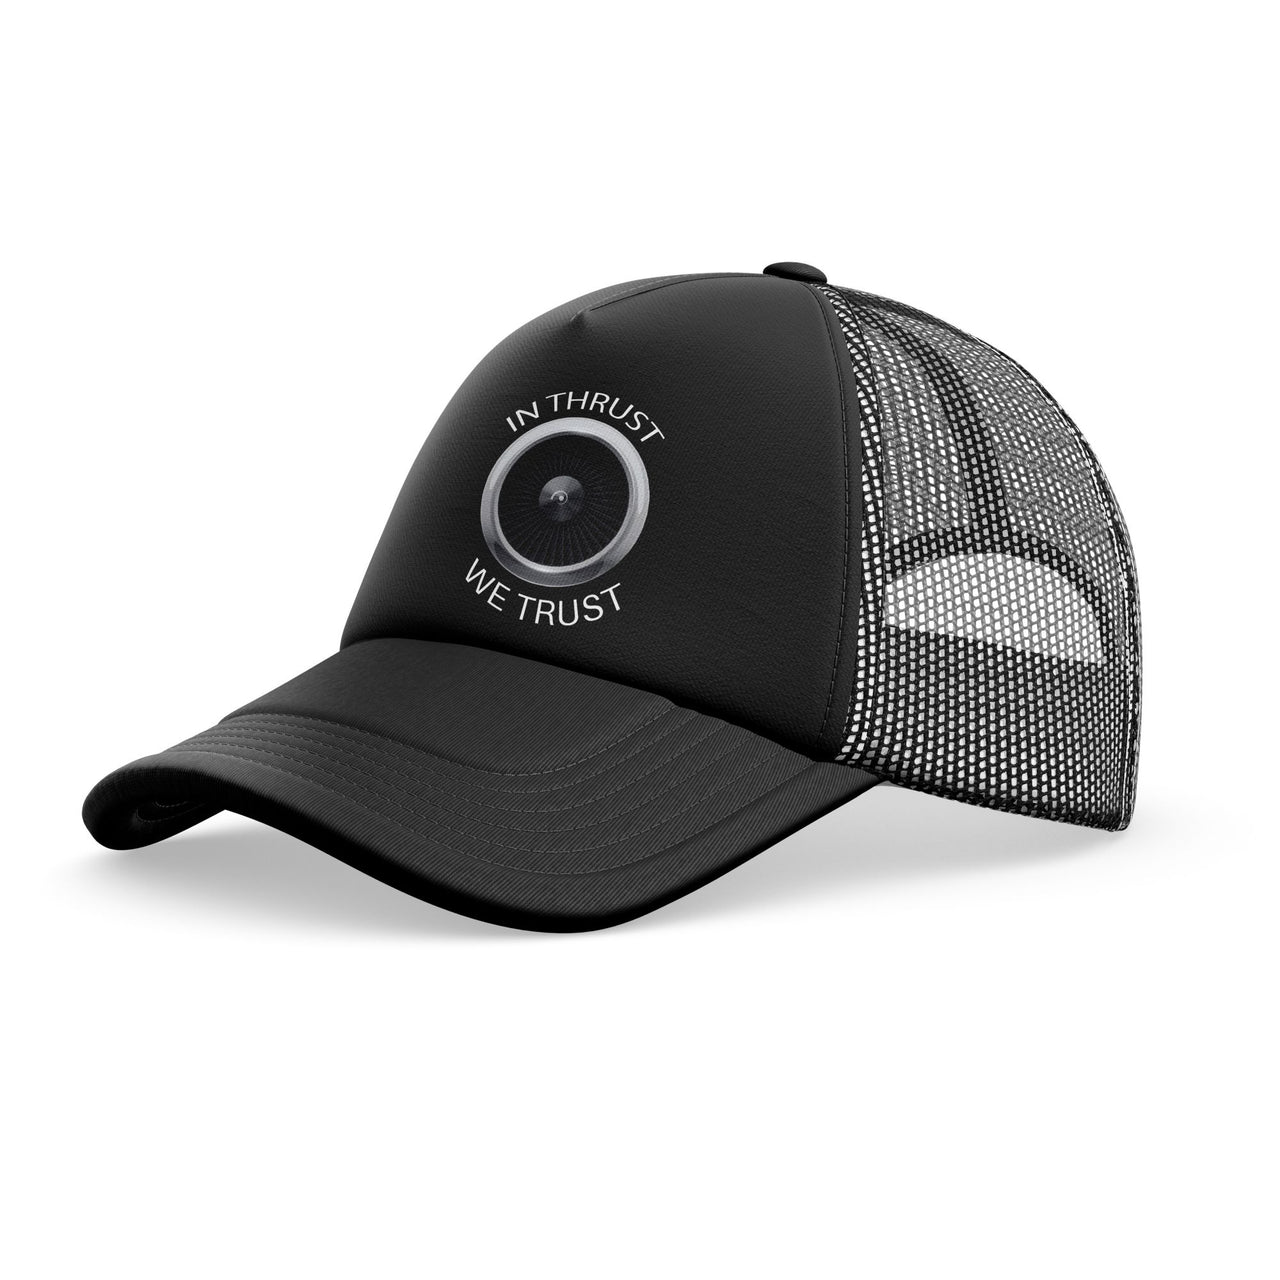 In Thrust We Trust Designed Trucker Caps & Hats